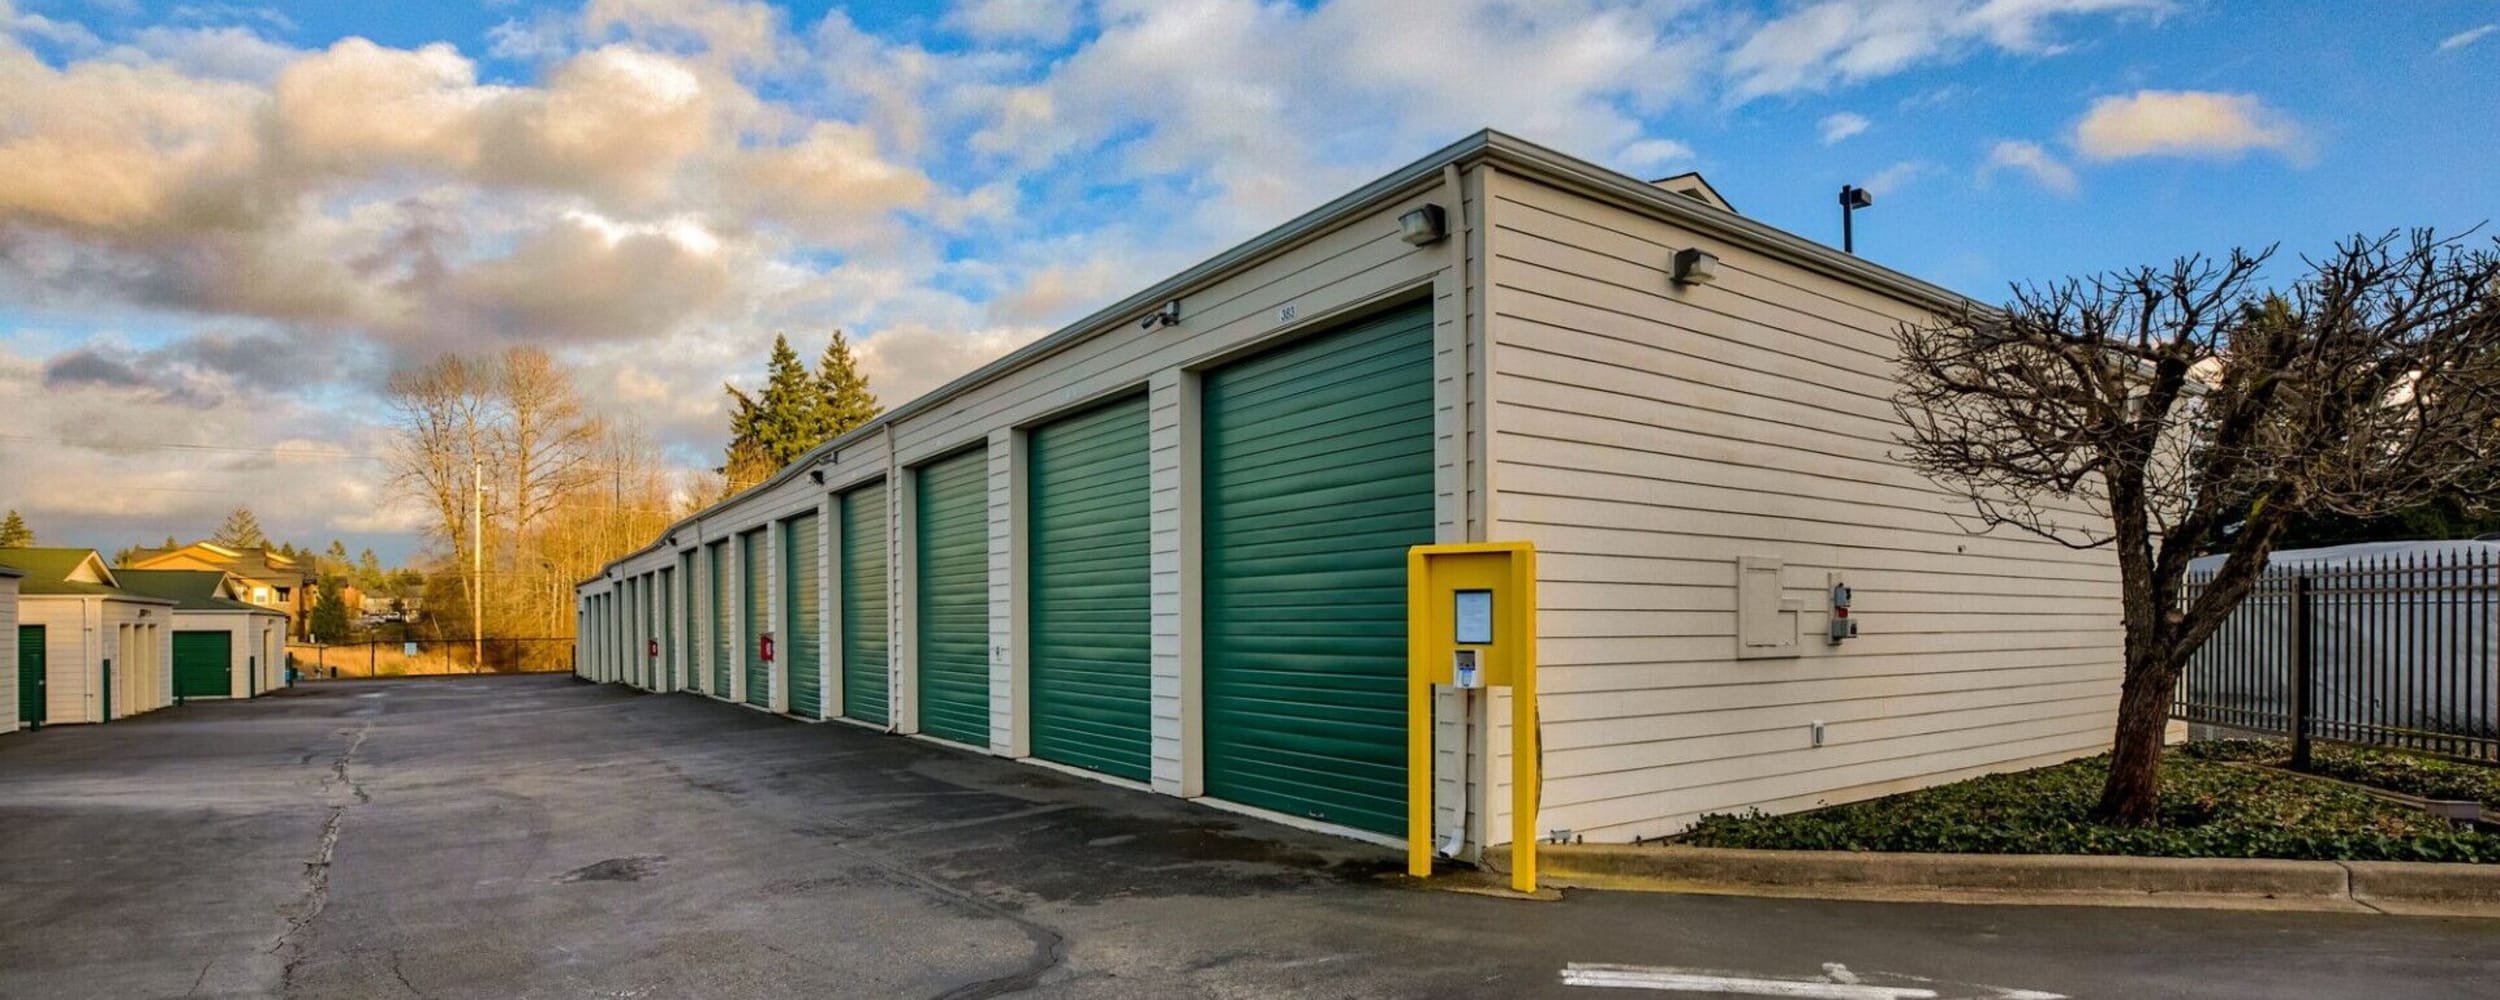 Large driveways with units at Canyon Road Self Storage in Tacoma, Washington